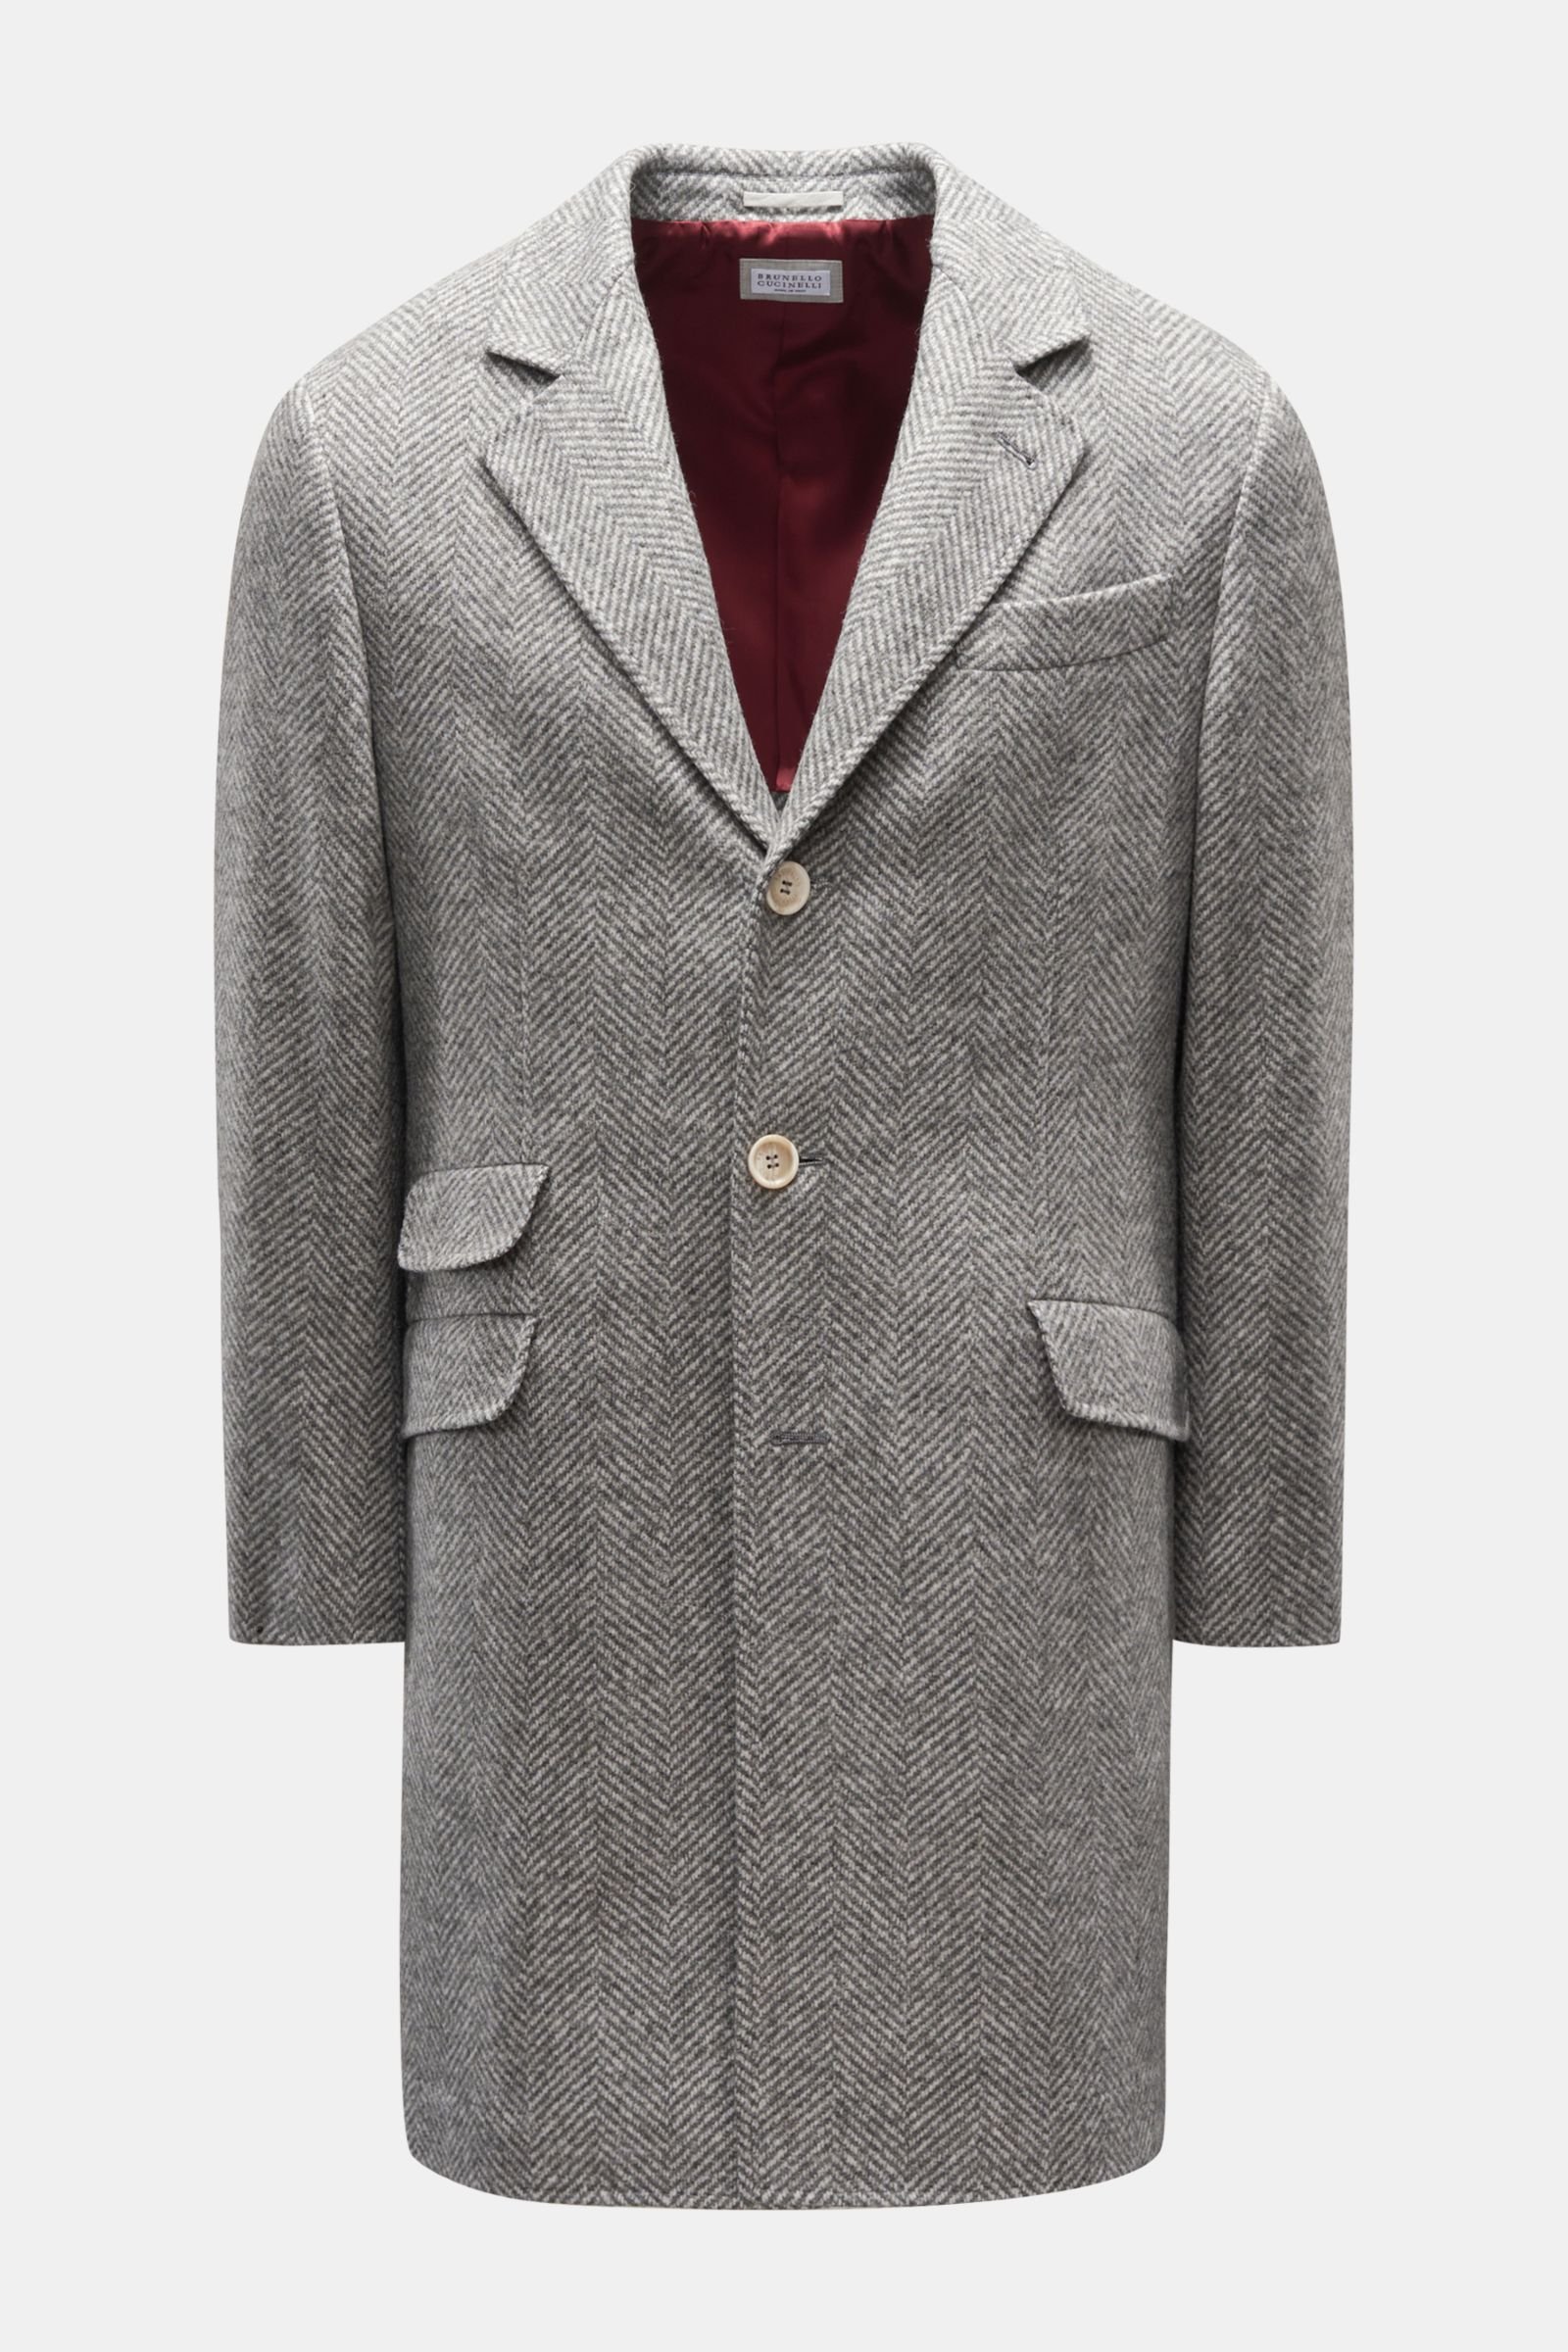 Coat grey patterned